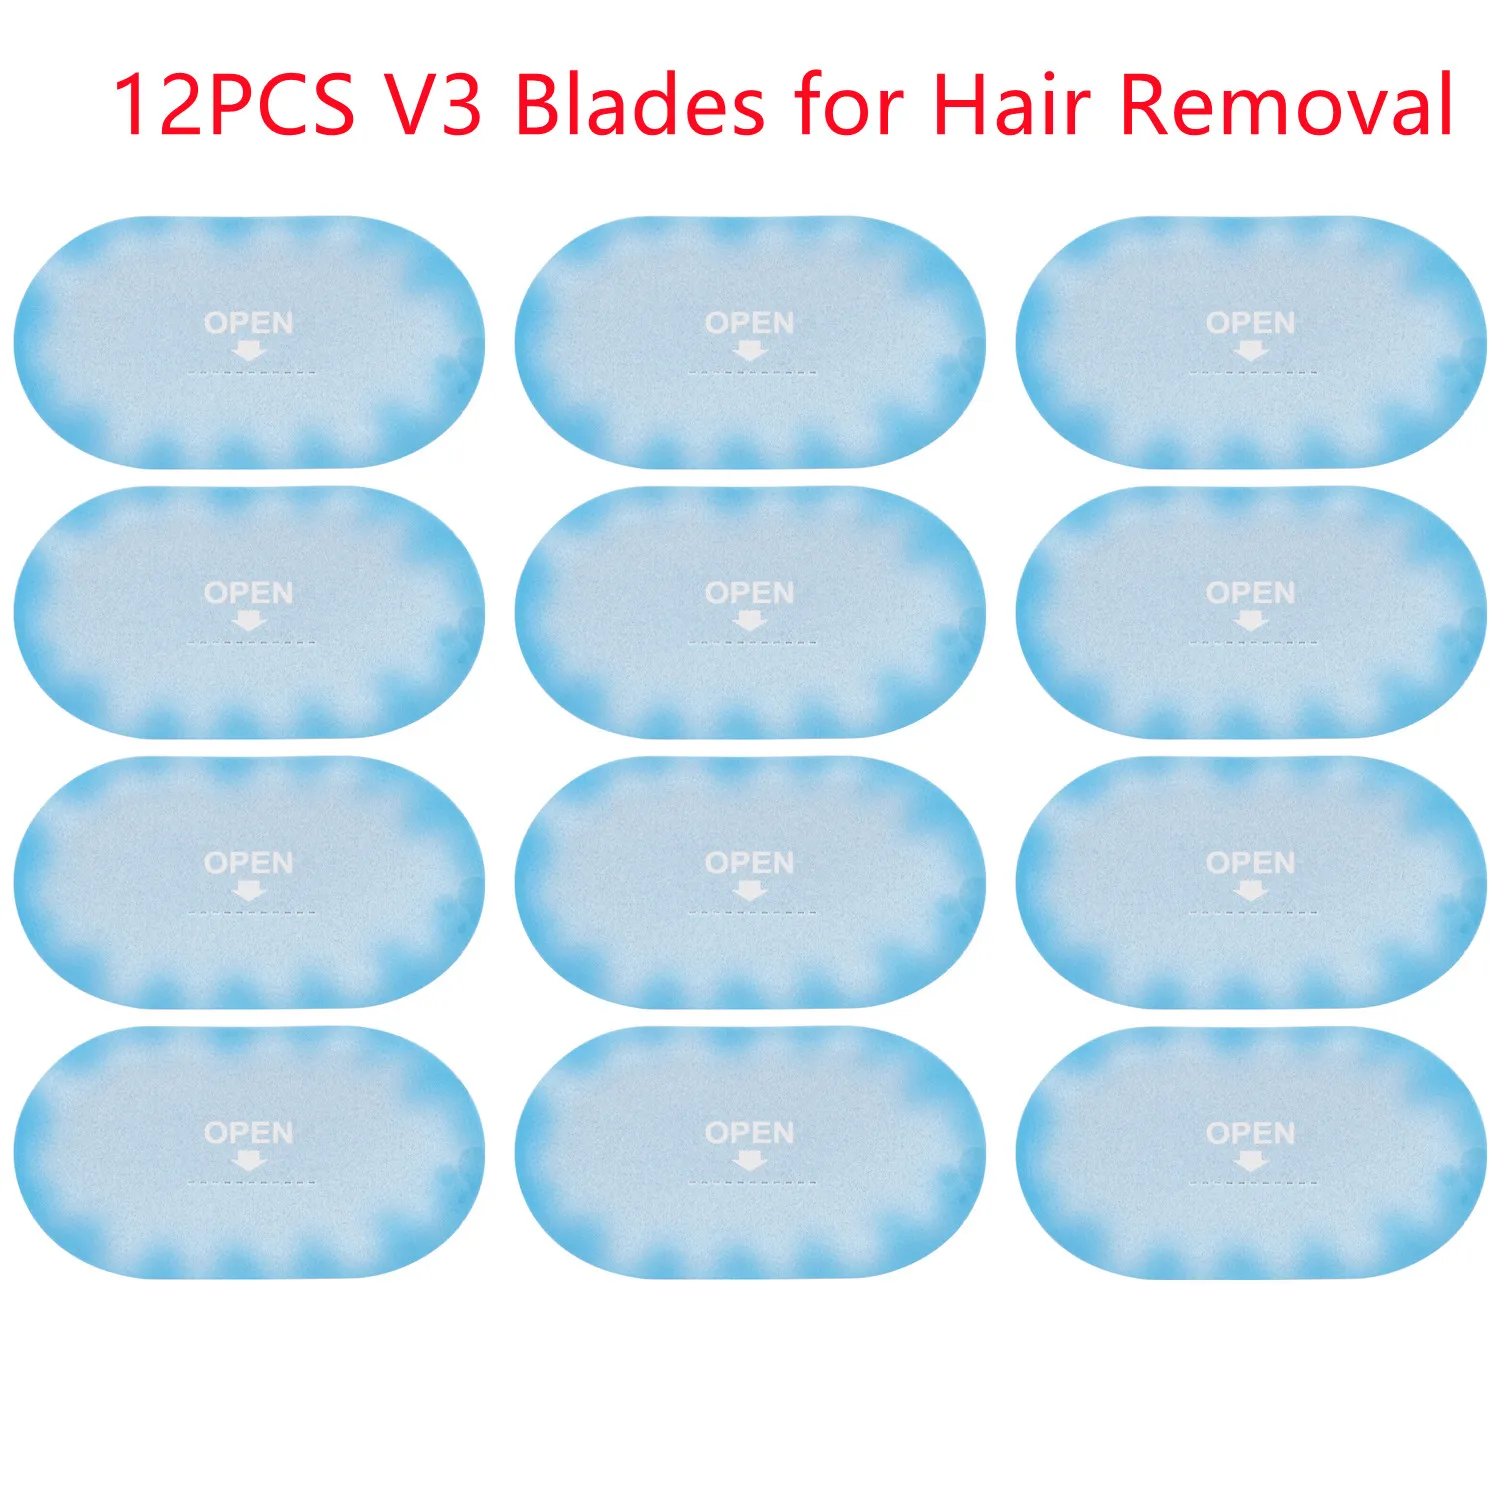 12pcs Women  Venuse3 Razor Blades Hair Removal Refills for Beauty Girl Shaving